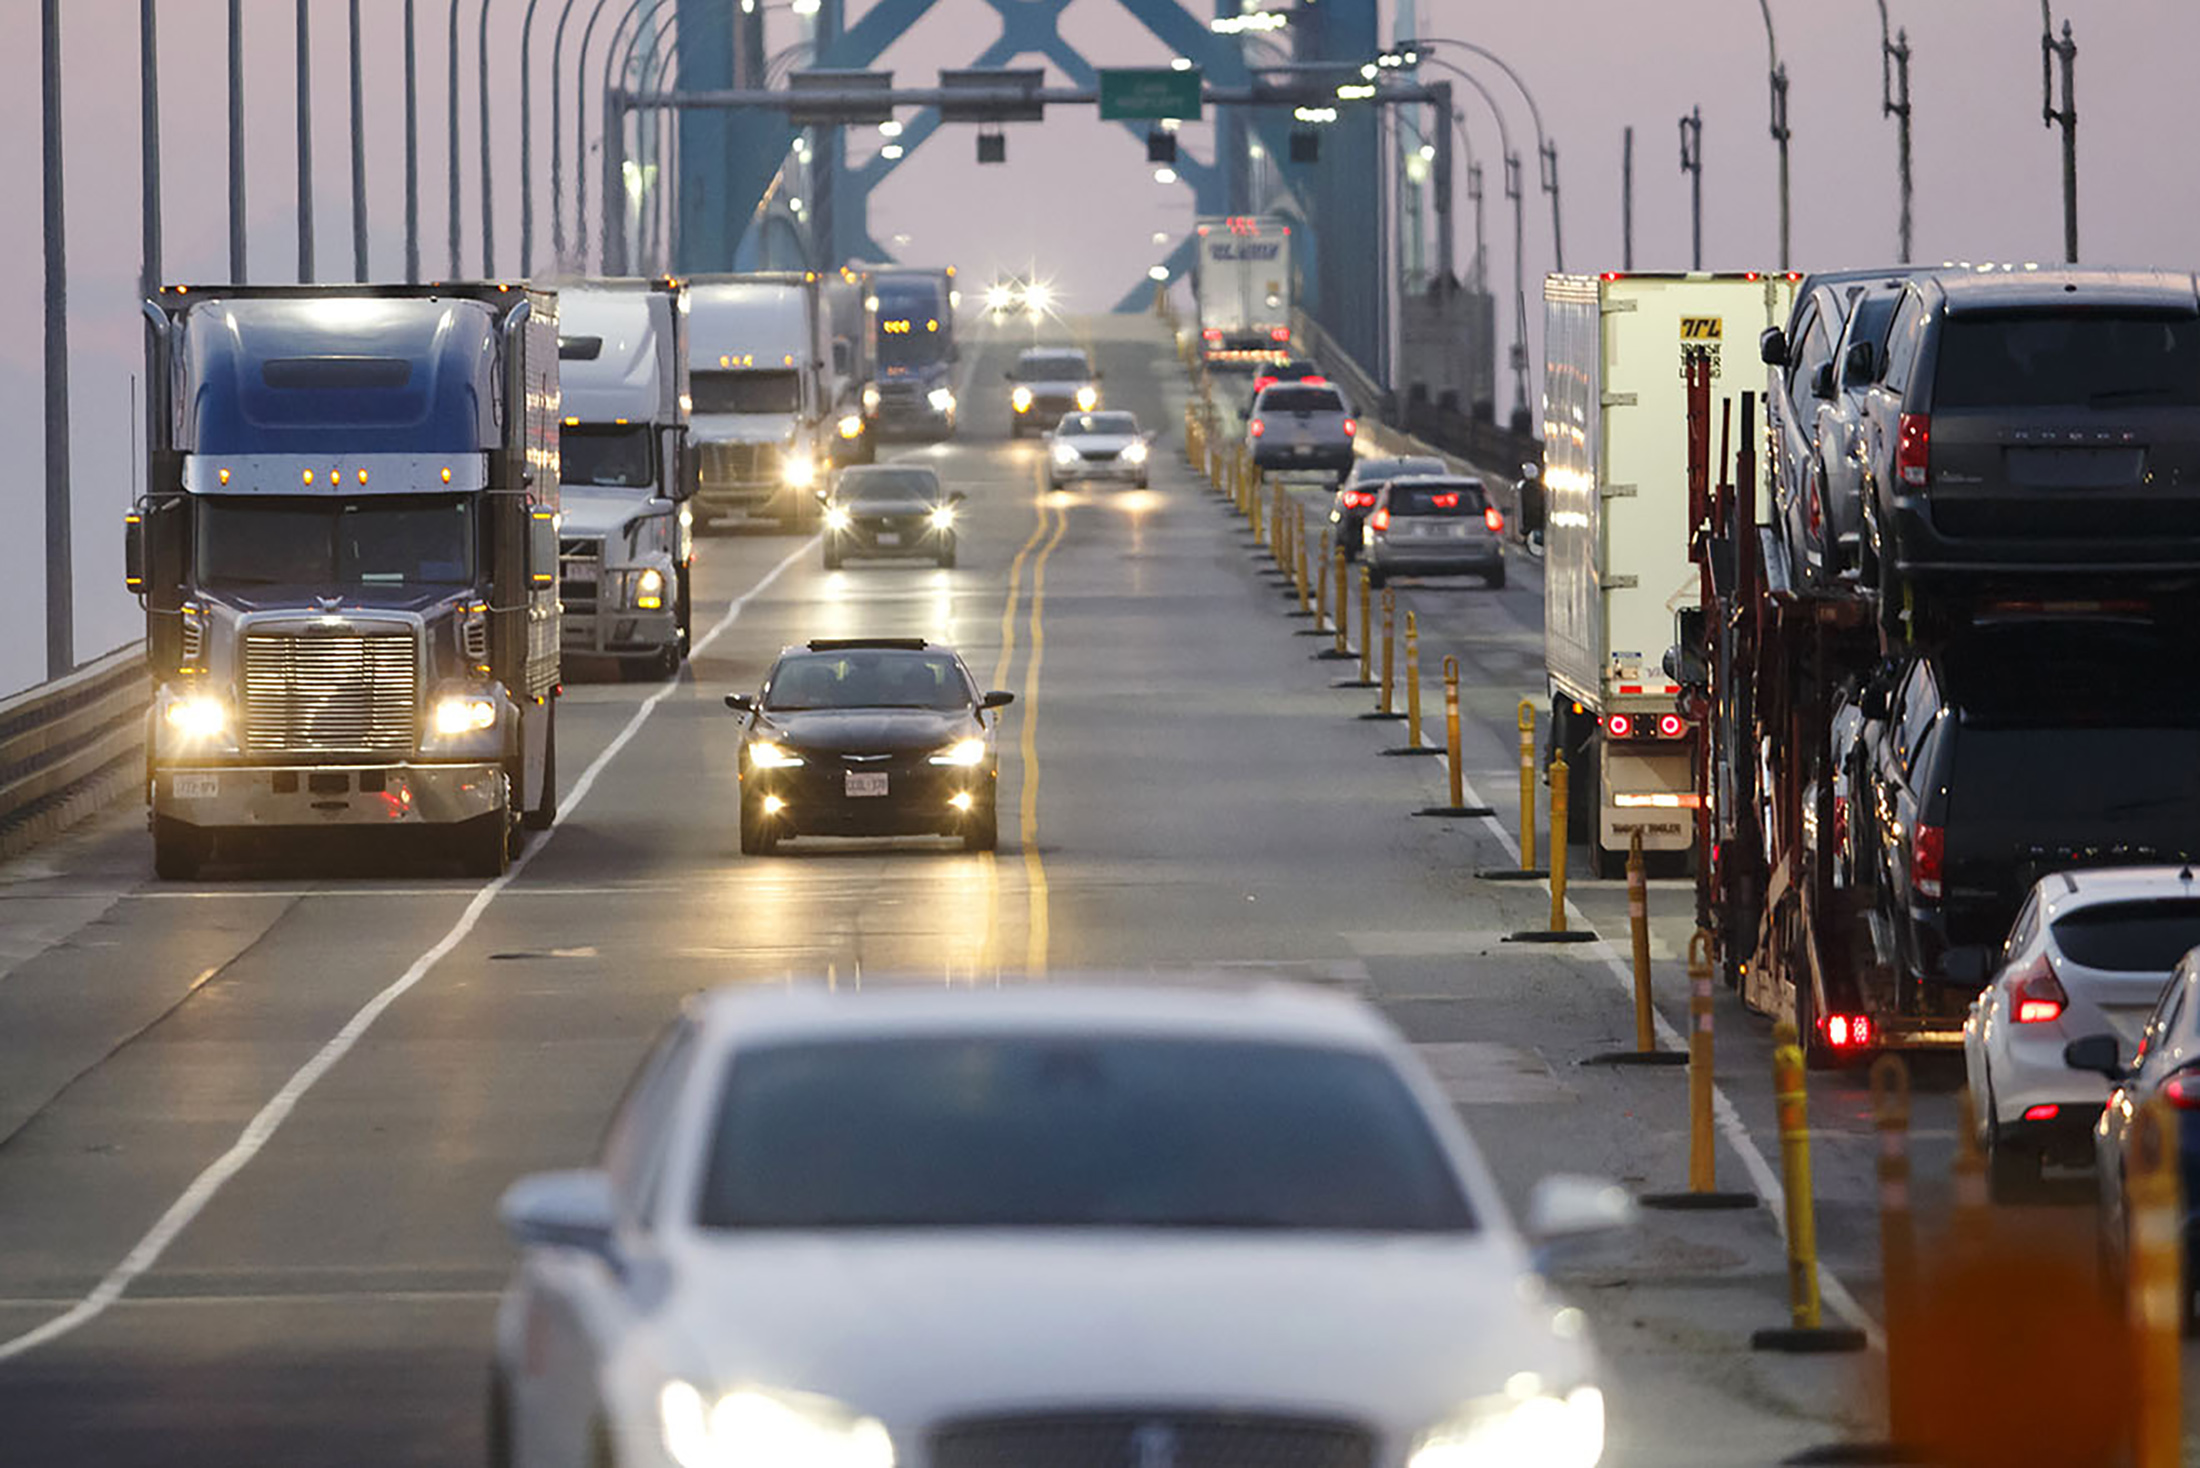 Ambassador Bridge Traffic At The U.S. Border As Canada Overcomes Trump's Metal Tariffs With Record Exports